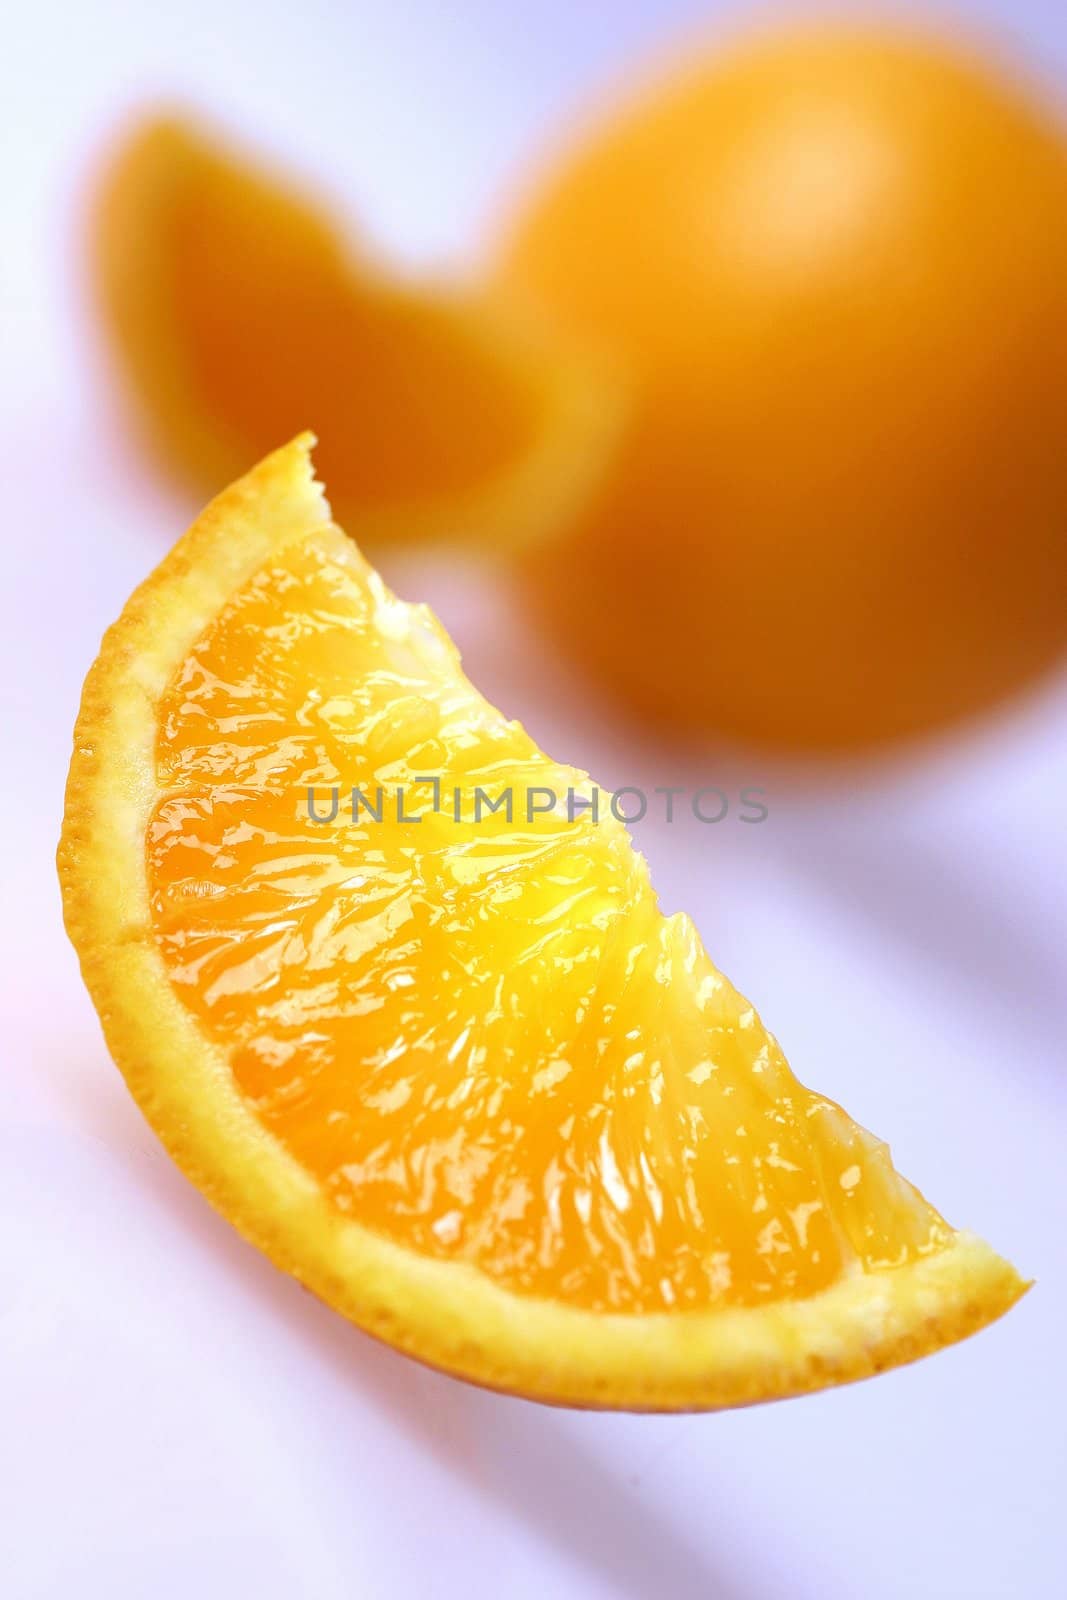 image of a piece of fresh juicy orange